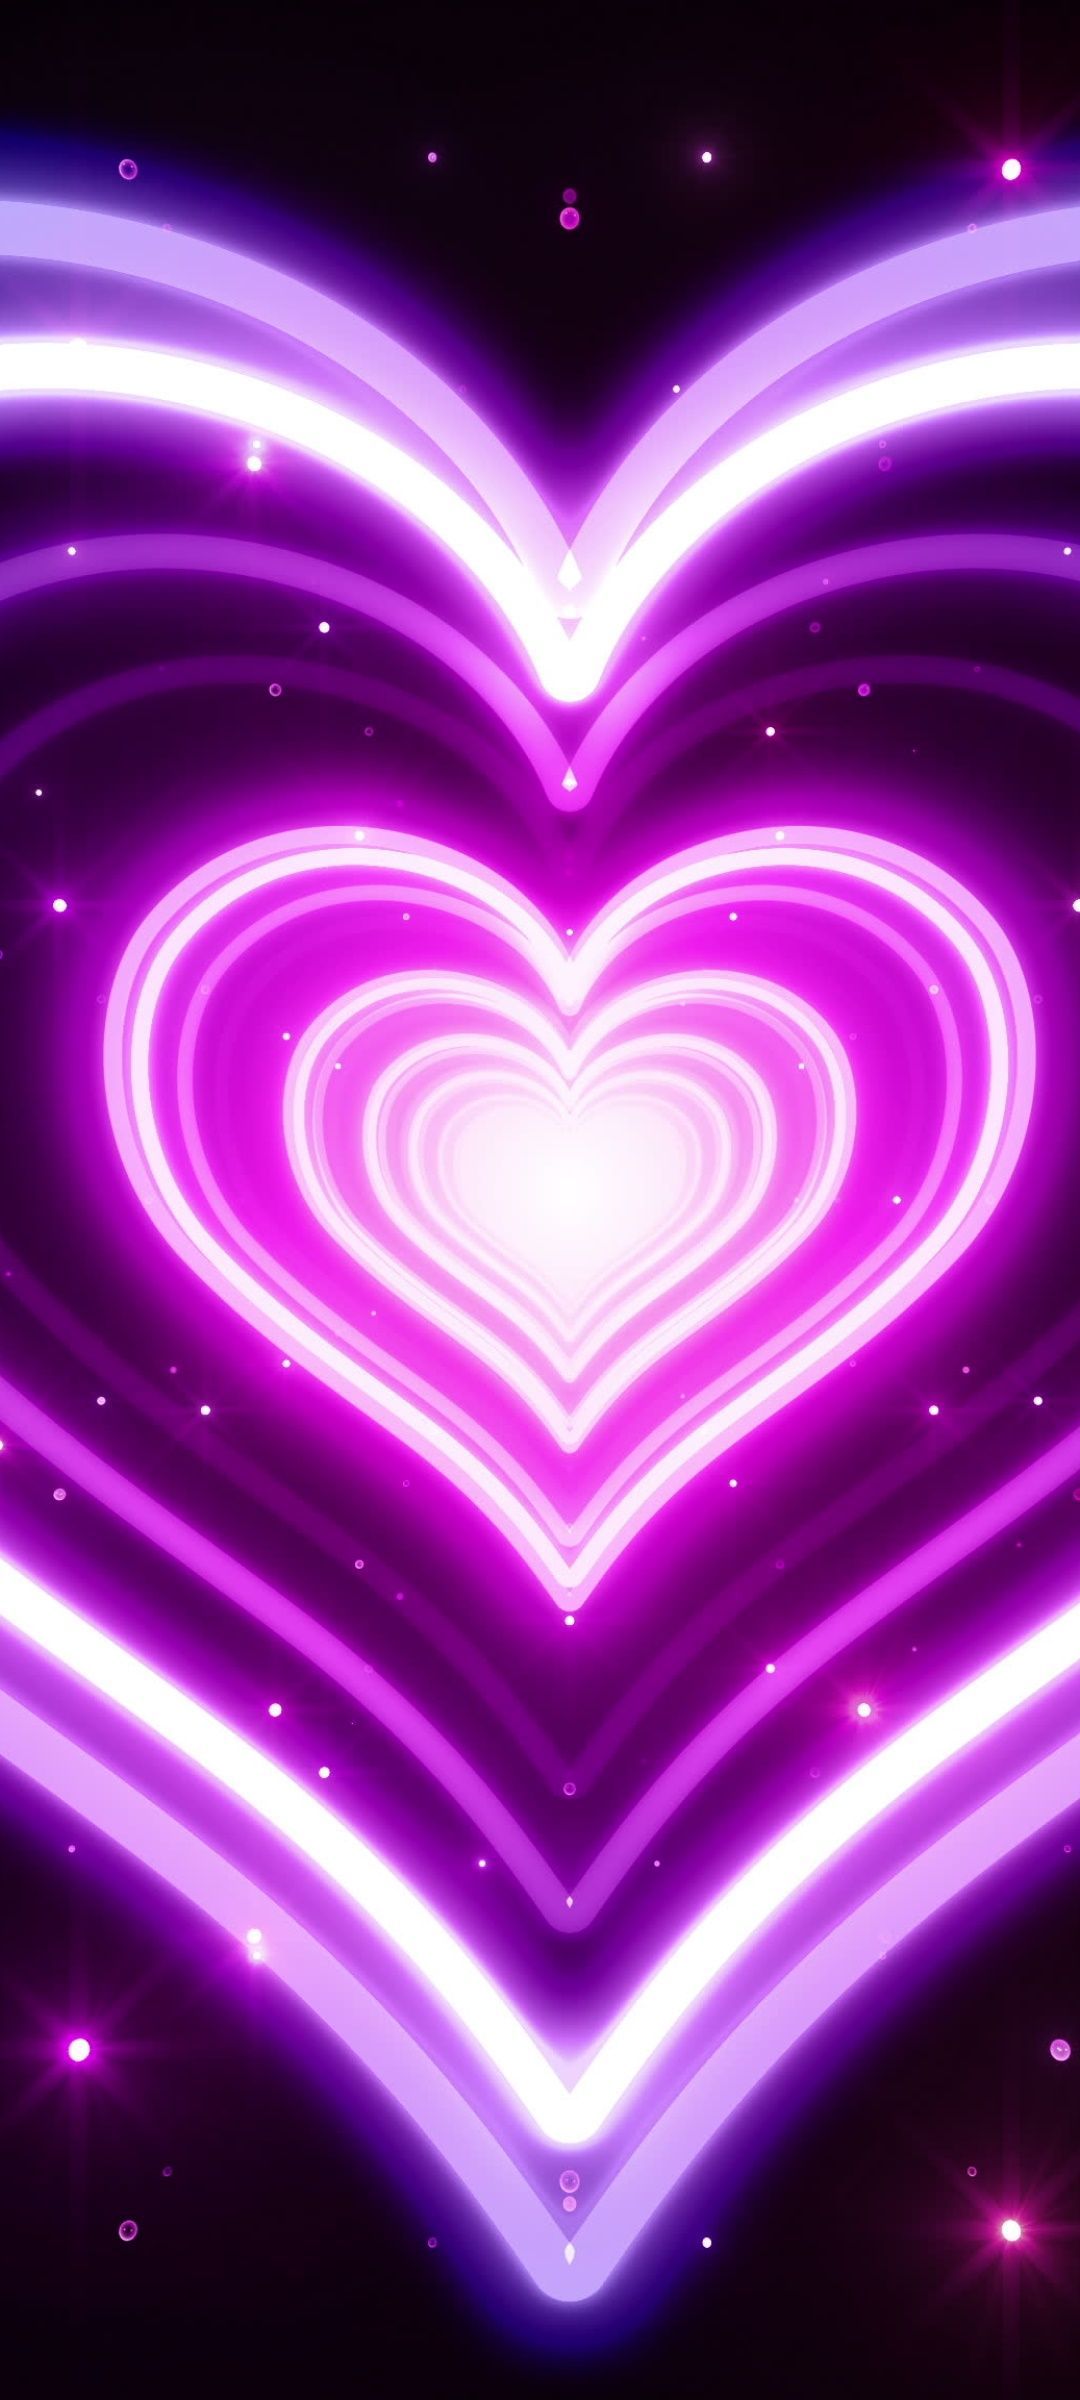 Wallpaper / Artistic Heart Phone Wallpaper, Neon, Purple, 1080x2400 free download